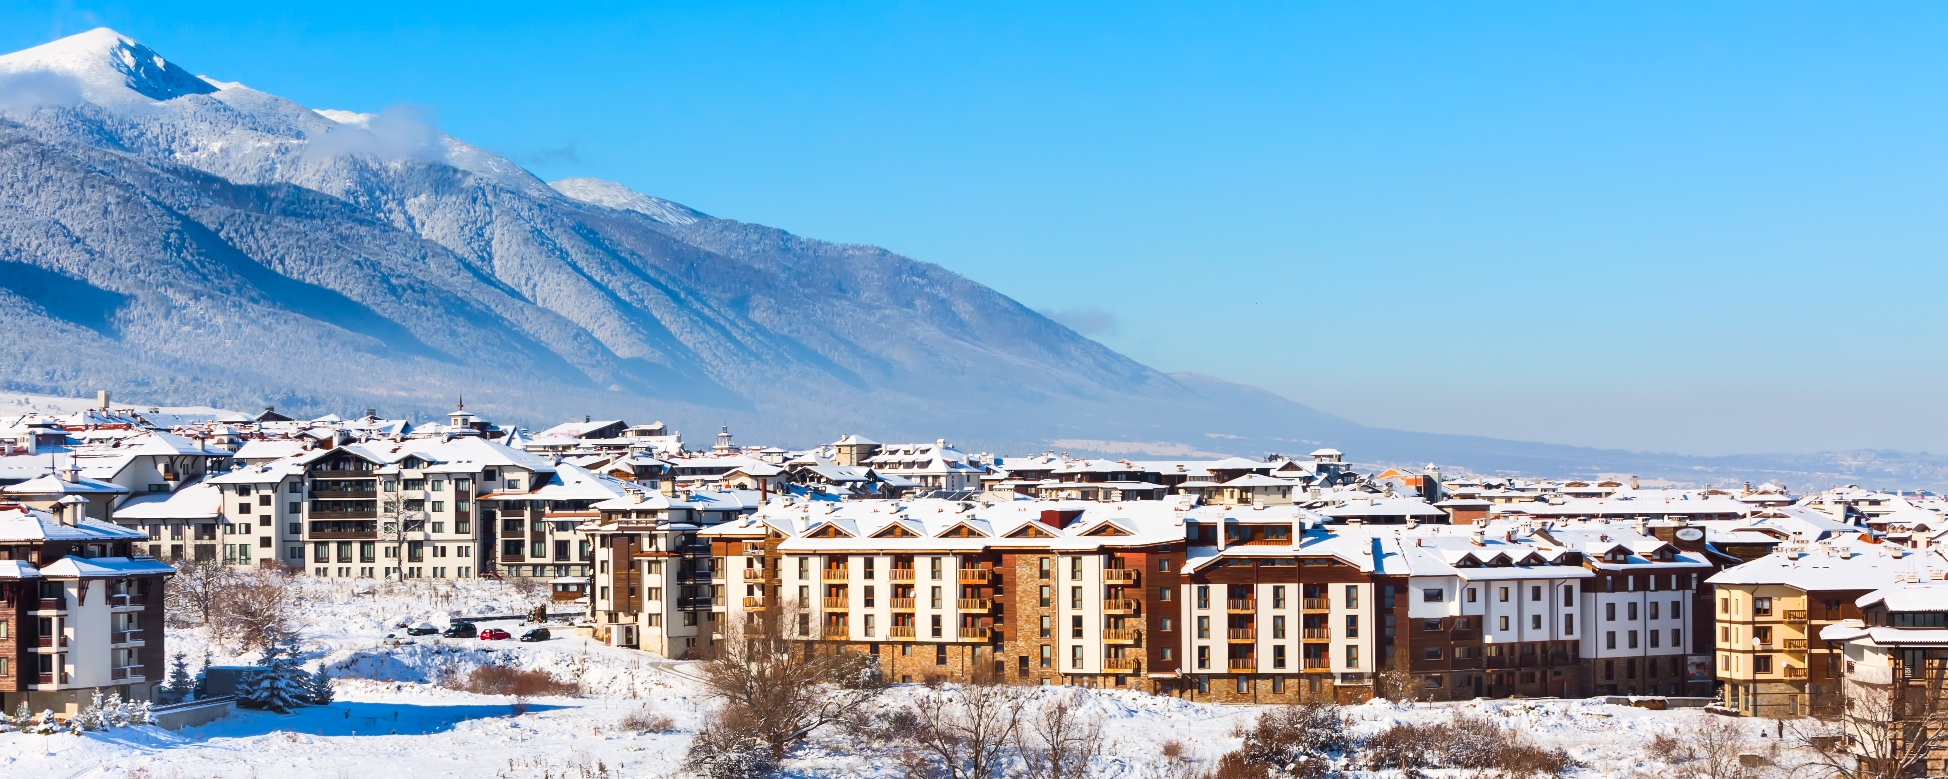 best bulgarian ski resort Bansko